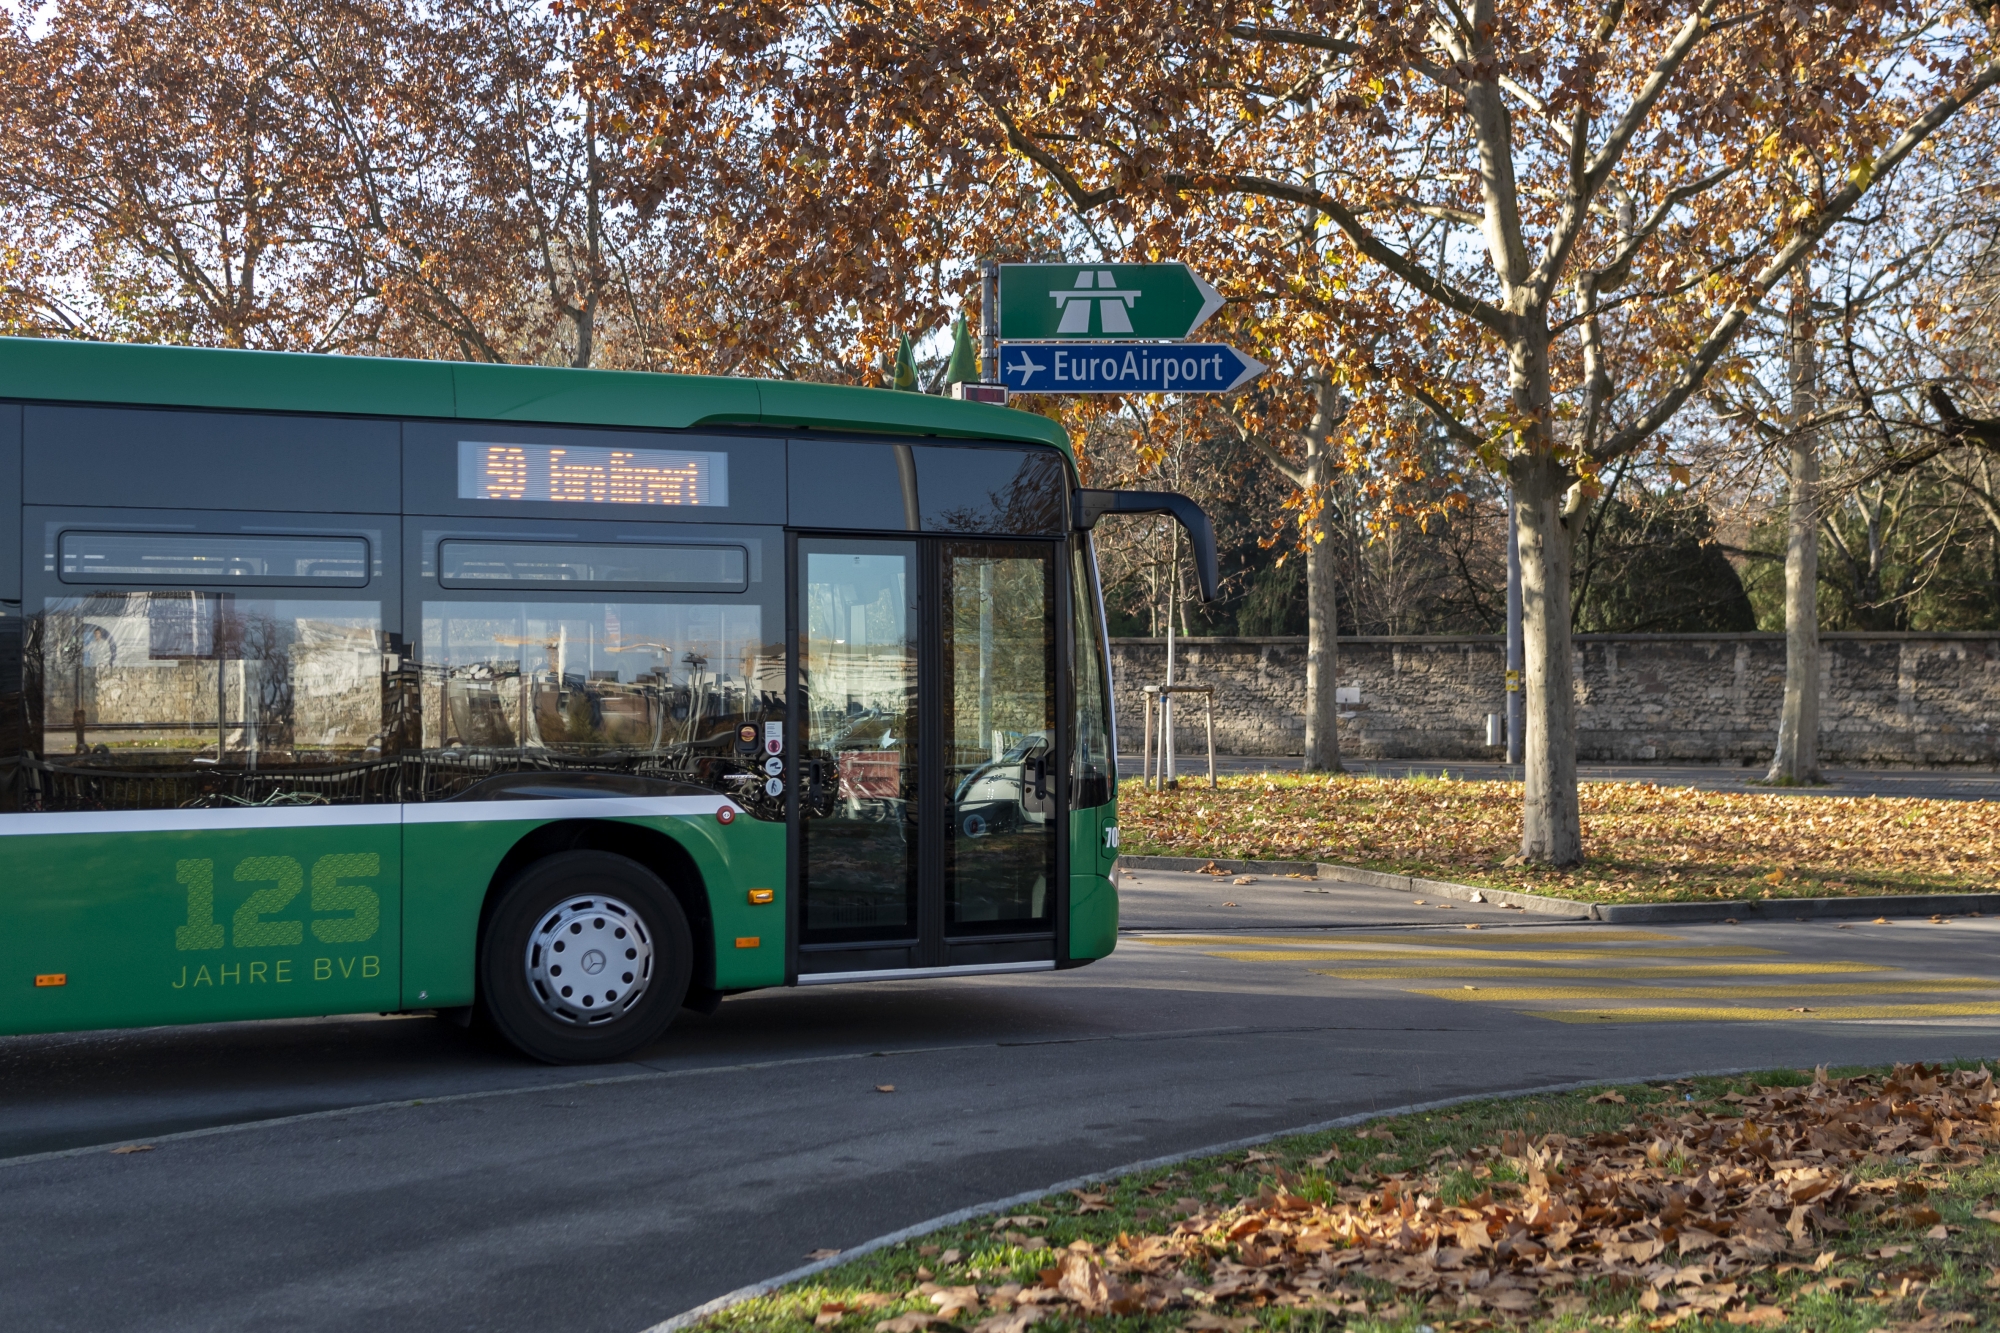 Der Bus der Basler Verkehrs-Betriebe BVB mit der Nummer 50 in Richtung EuroAirport an der Haltestelle Kannenfeldplatz in Basel, am Mittwoch, 25. November 2020. (KEYSTONE/Georgios Kefalas)